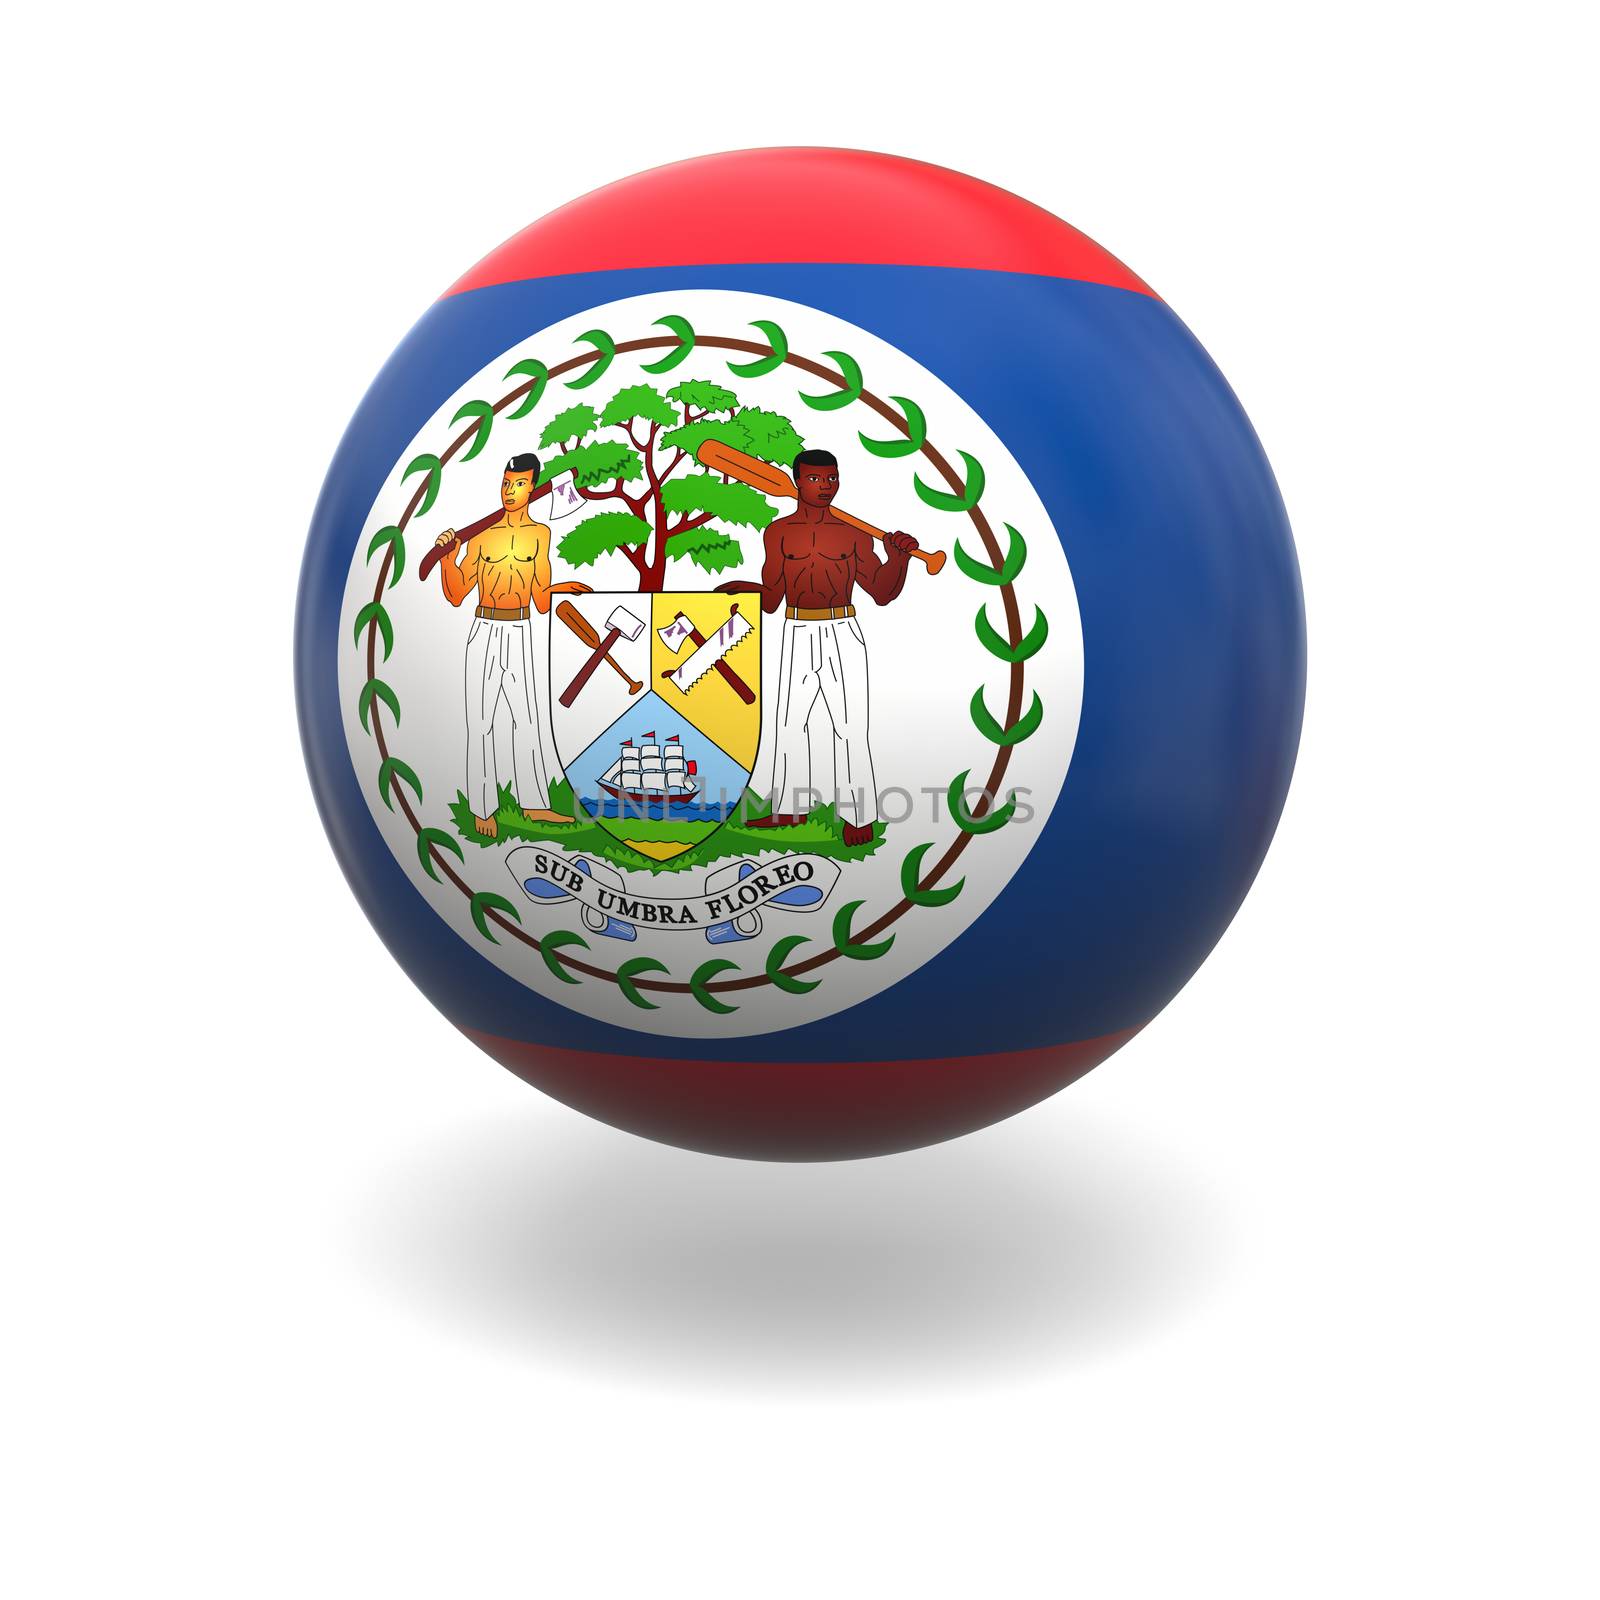 Belizean flag by Harvepino